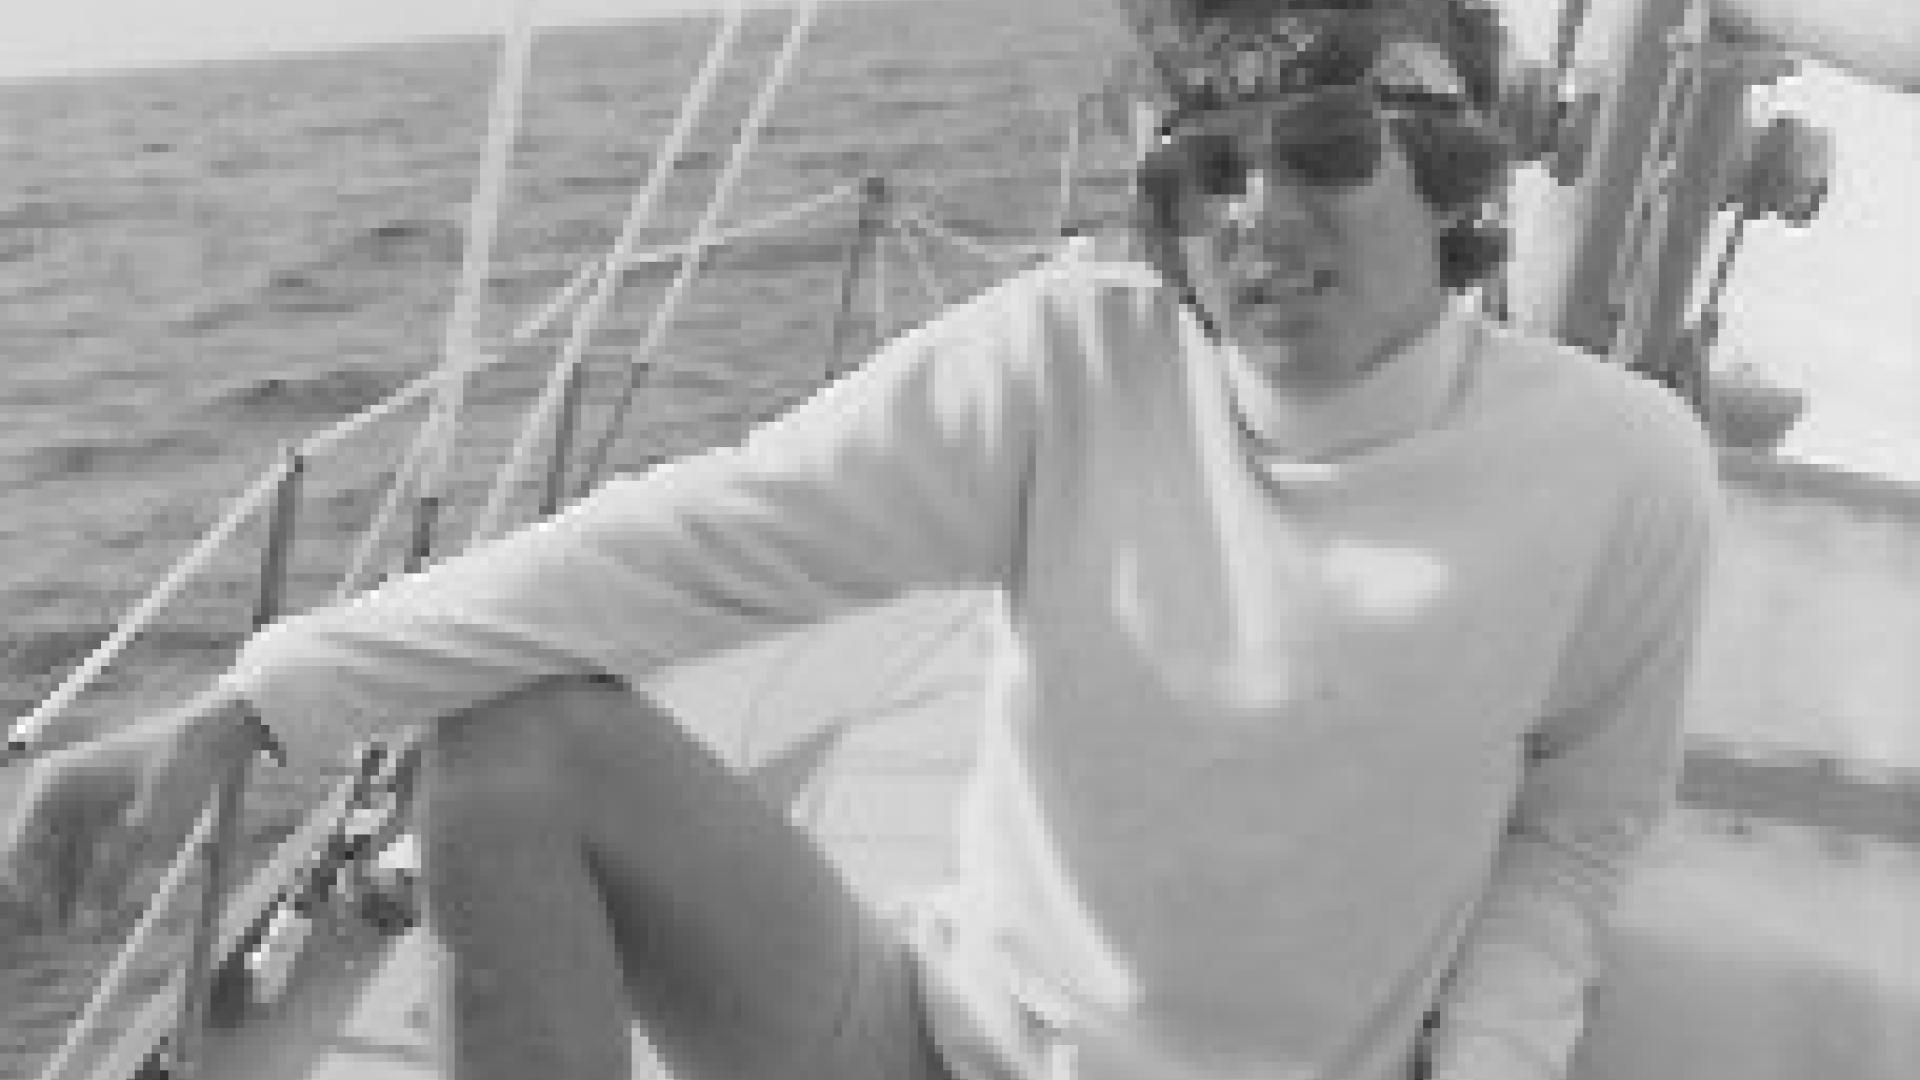 Michael circa 1969 on his boat